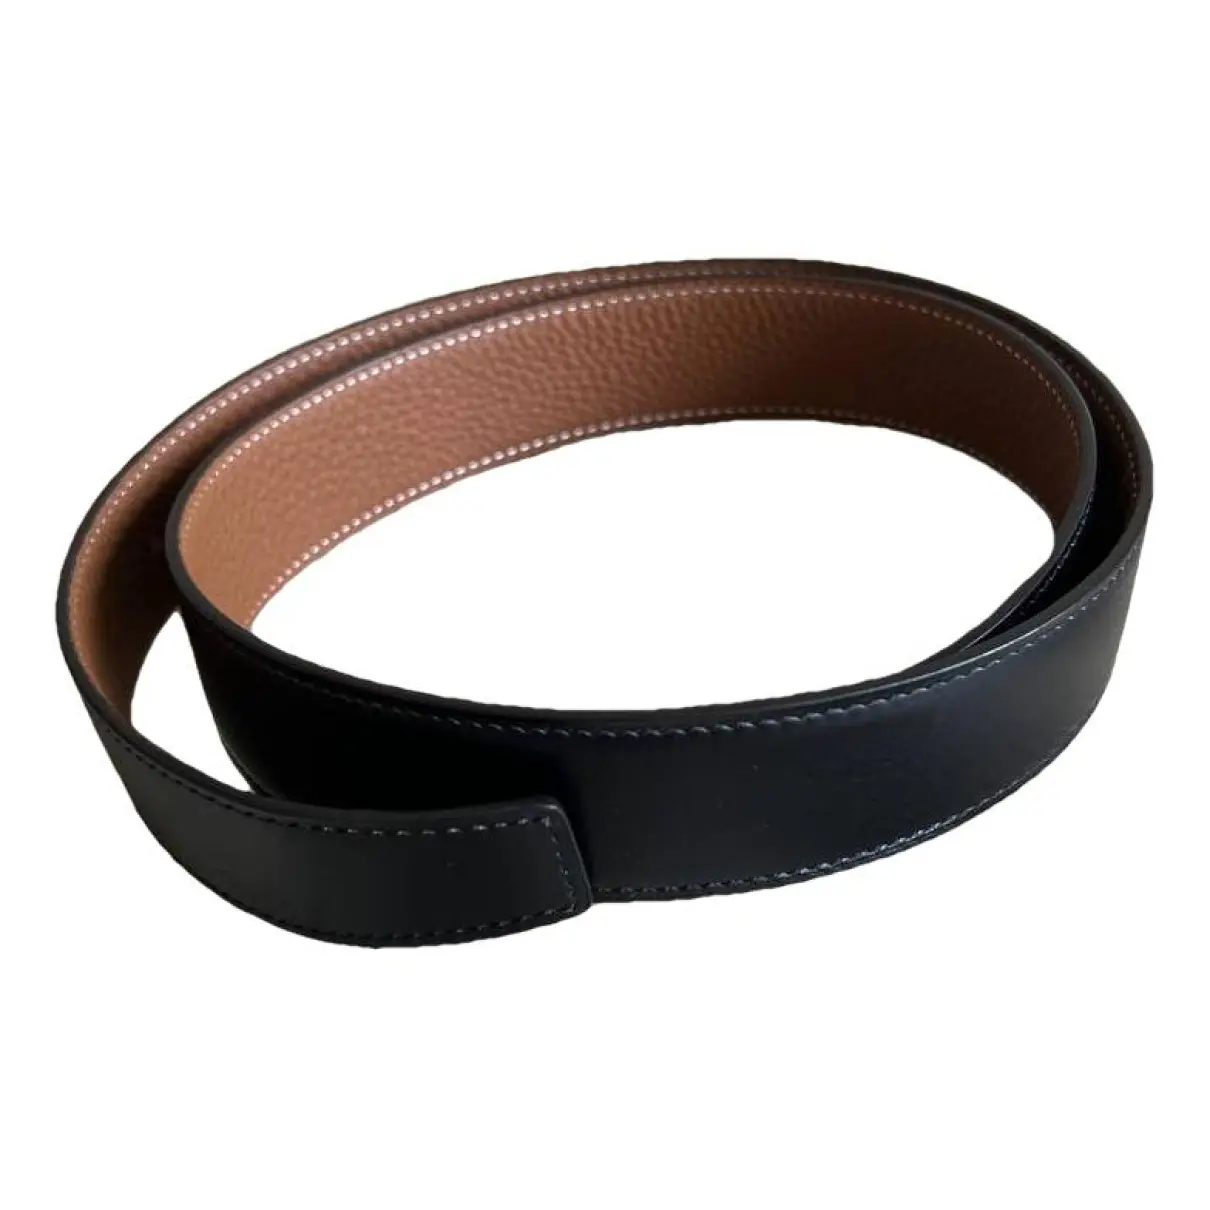 Cuir seul / Leather Strap leather belt